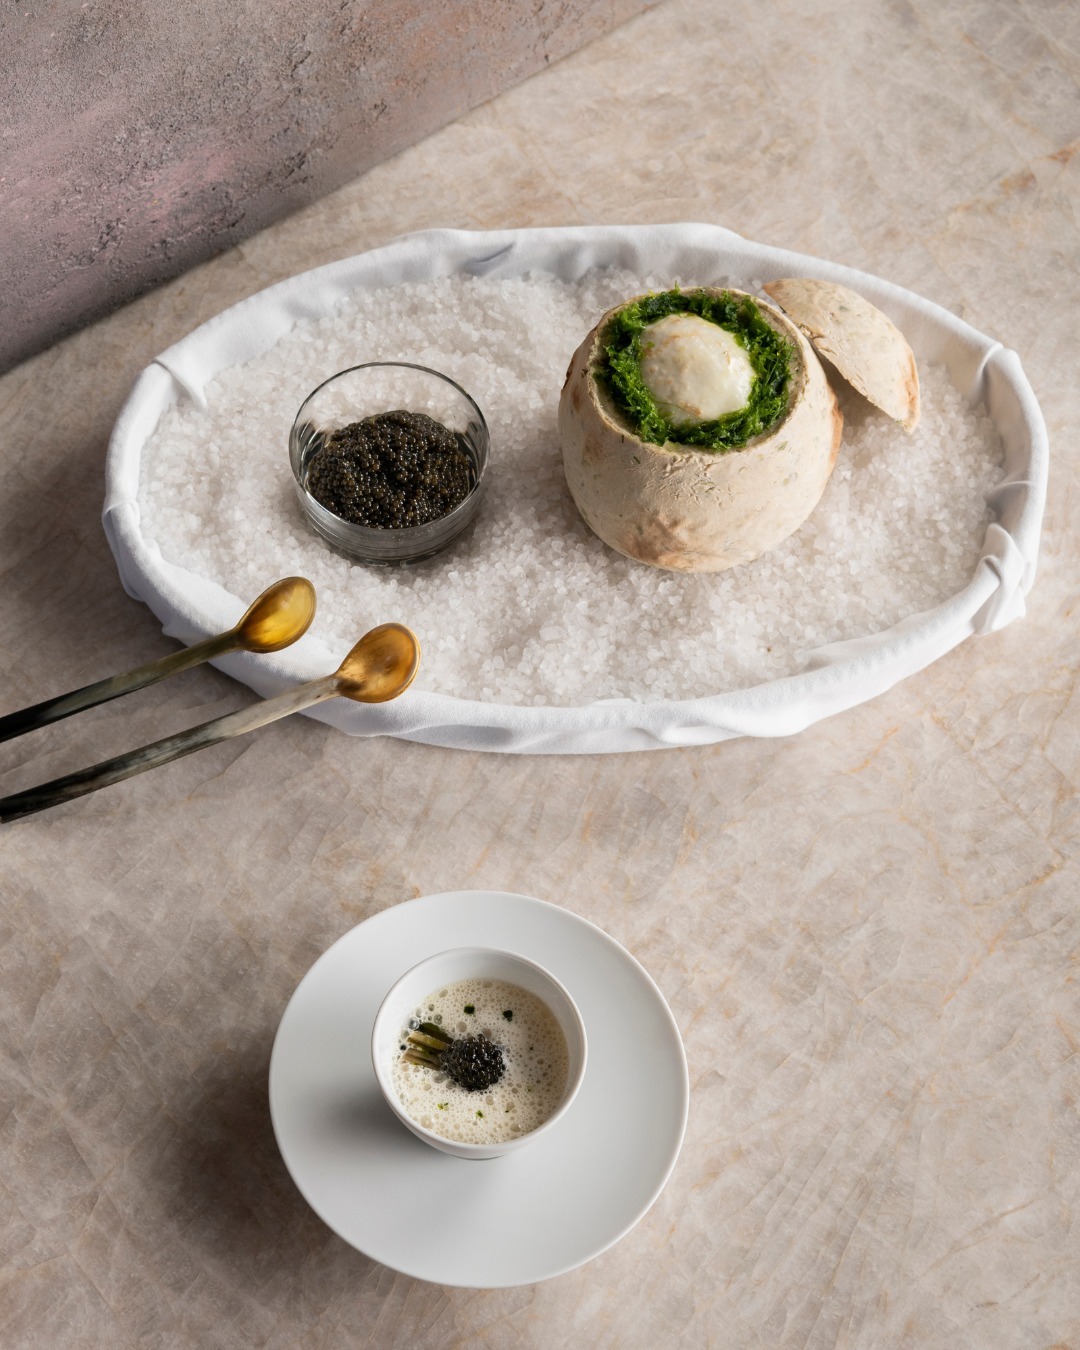 Ibis celeriac, baked in salt from Gozo, sea succulents and Kaluga caviar - Al Fresco Dining Spots in Malta 